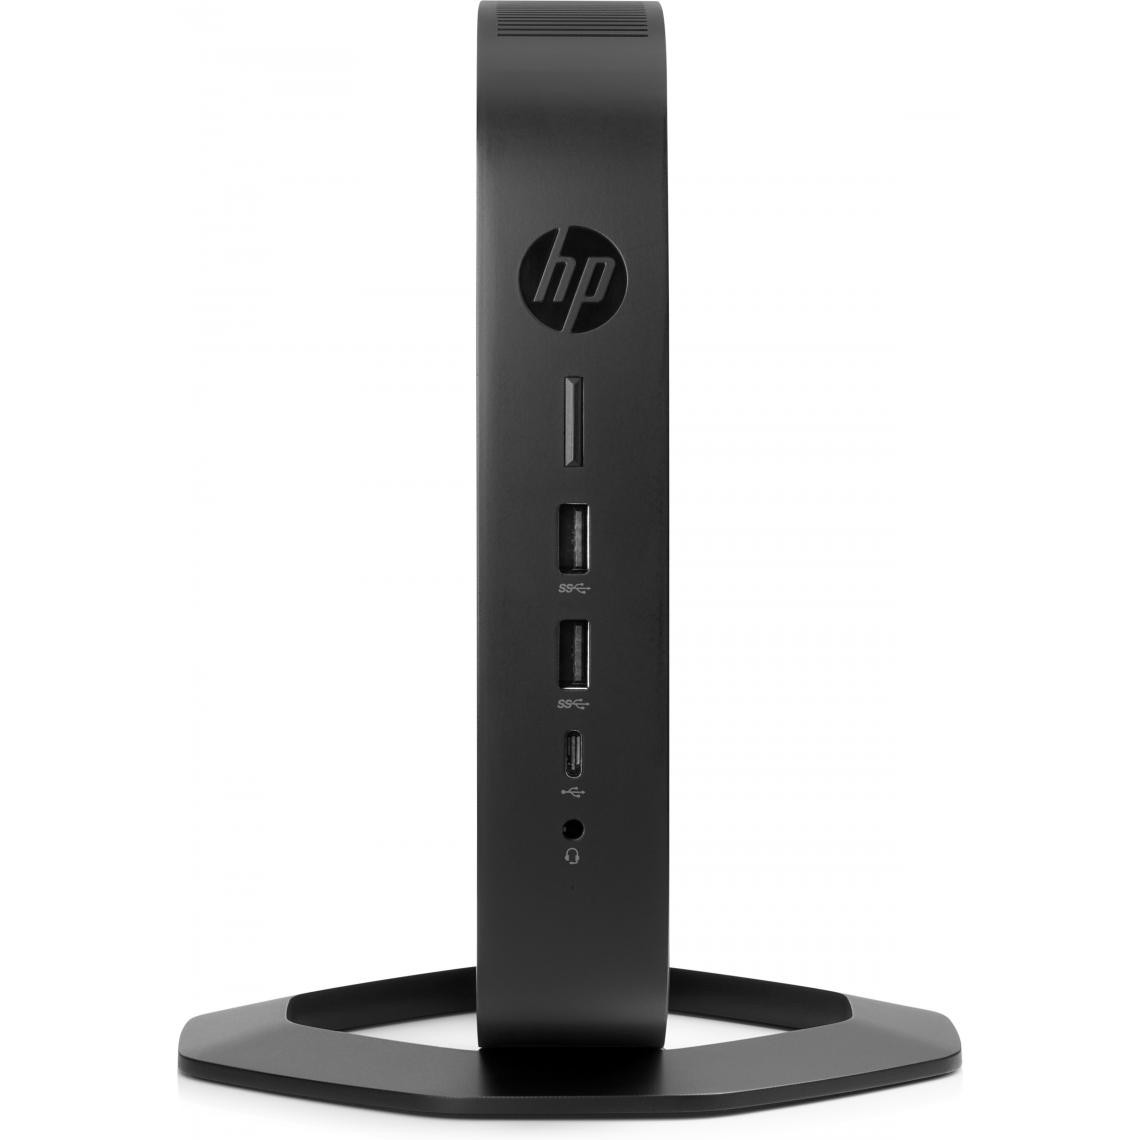 Hp - HP t640 2,4 GHz ThinPro 1 kg Noir R1505G - PC Fixe